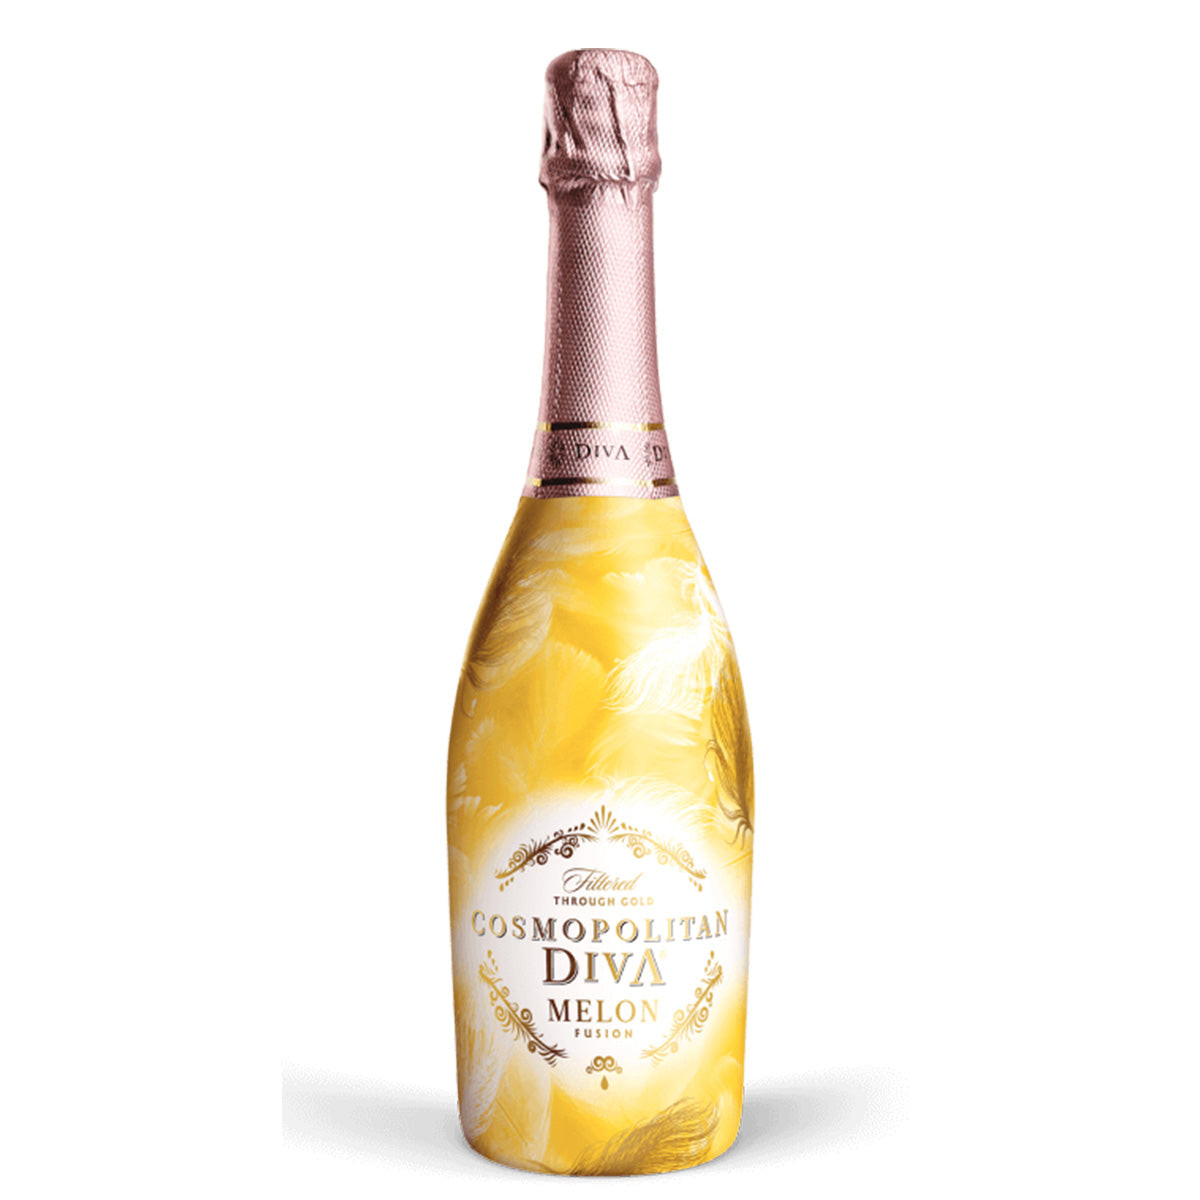 Cosmopolitan Diva Sparkling Wine (Melon)